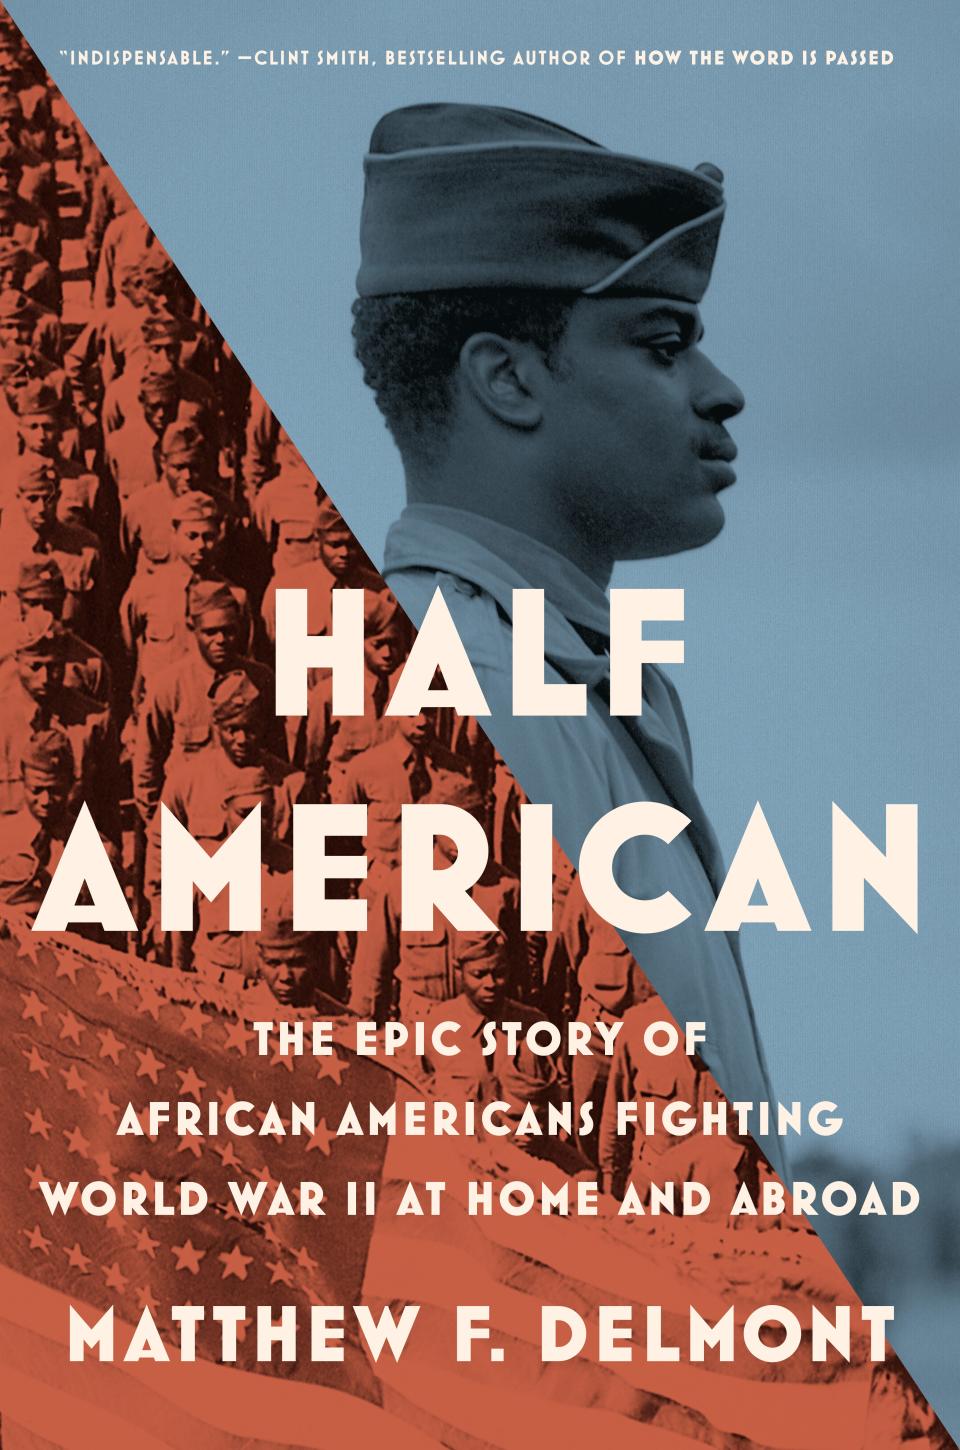 "Half American," by Matthew F. Delmont